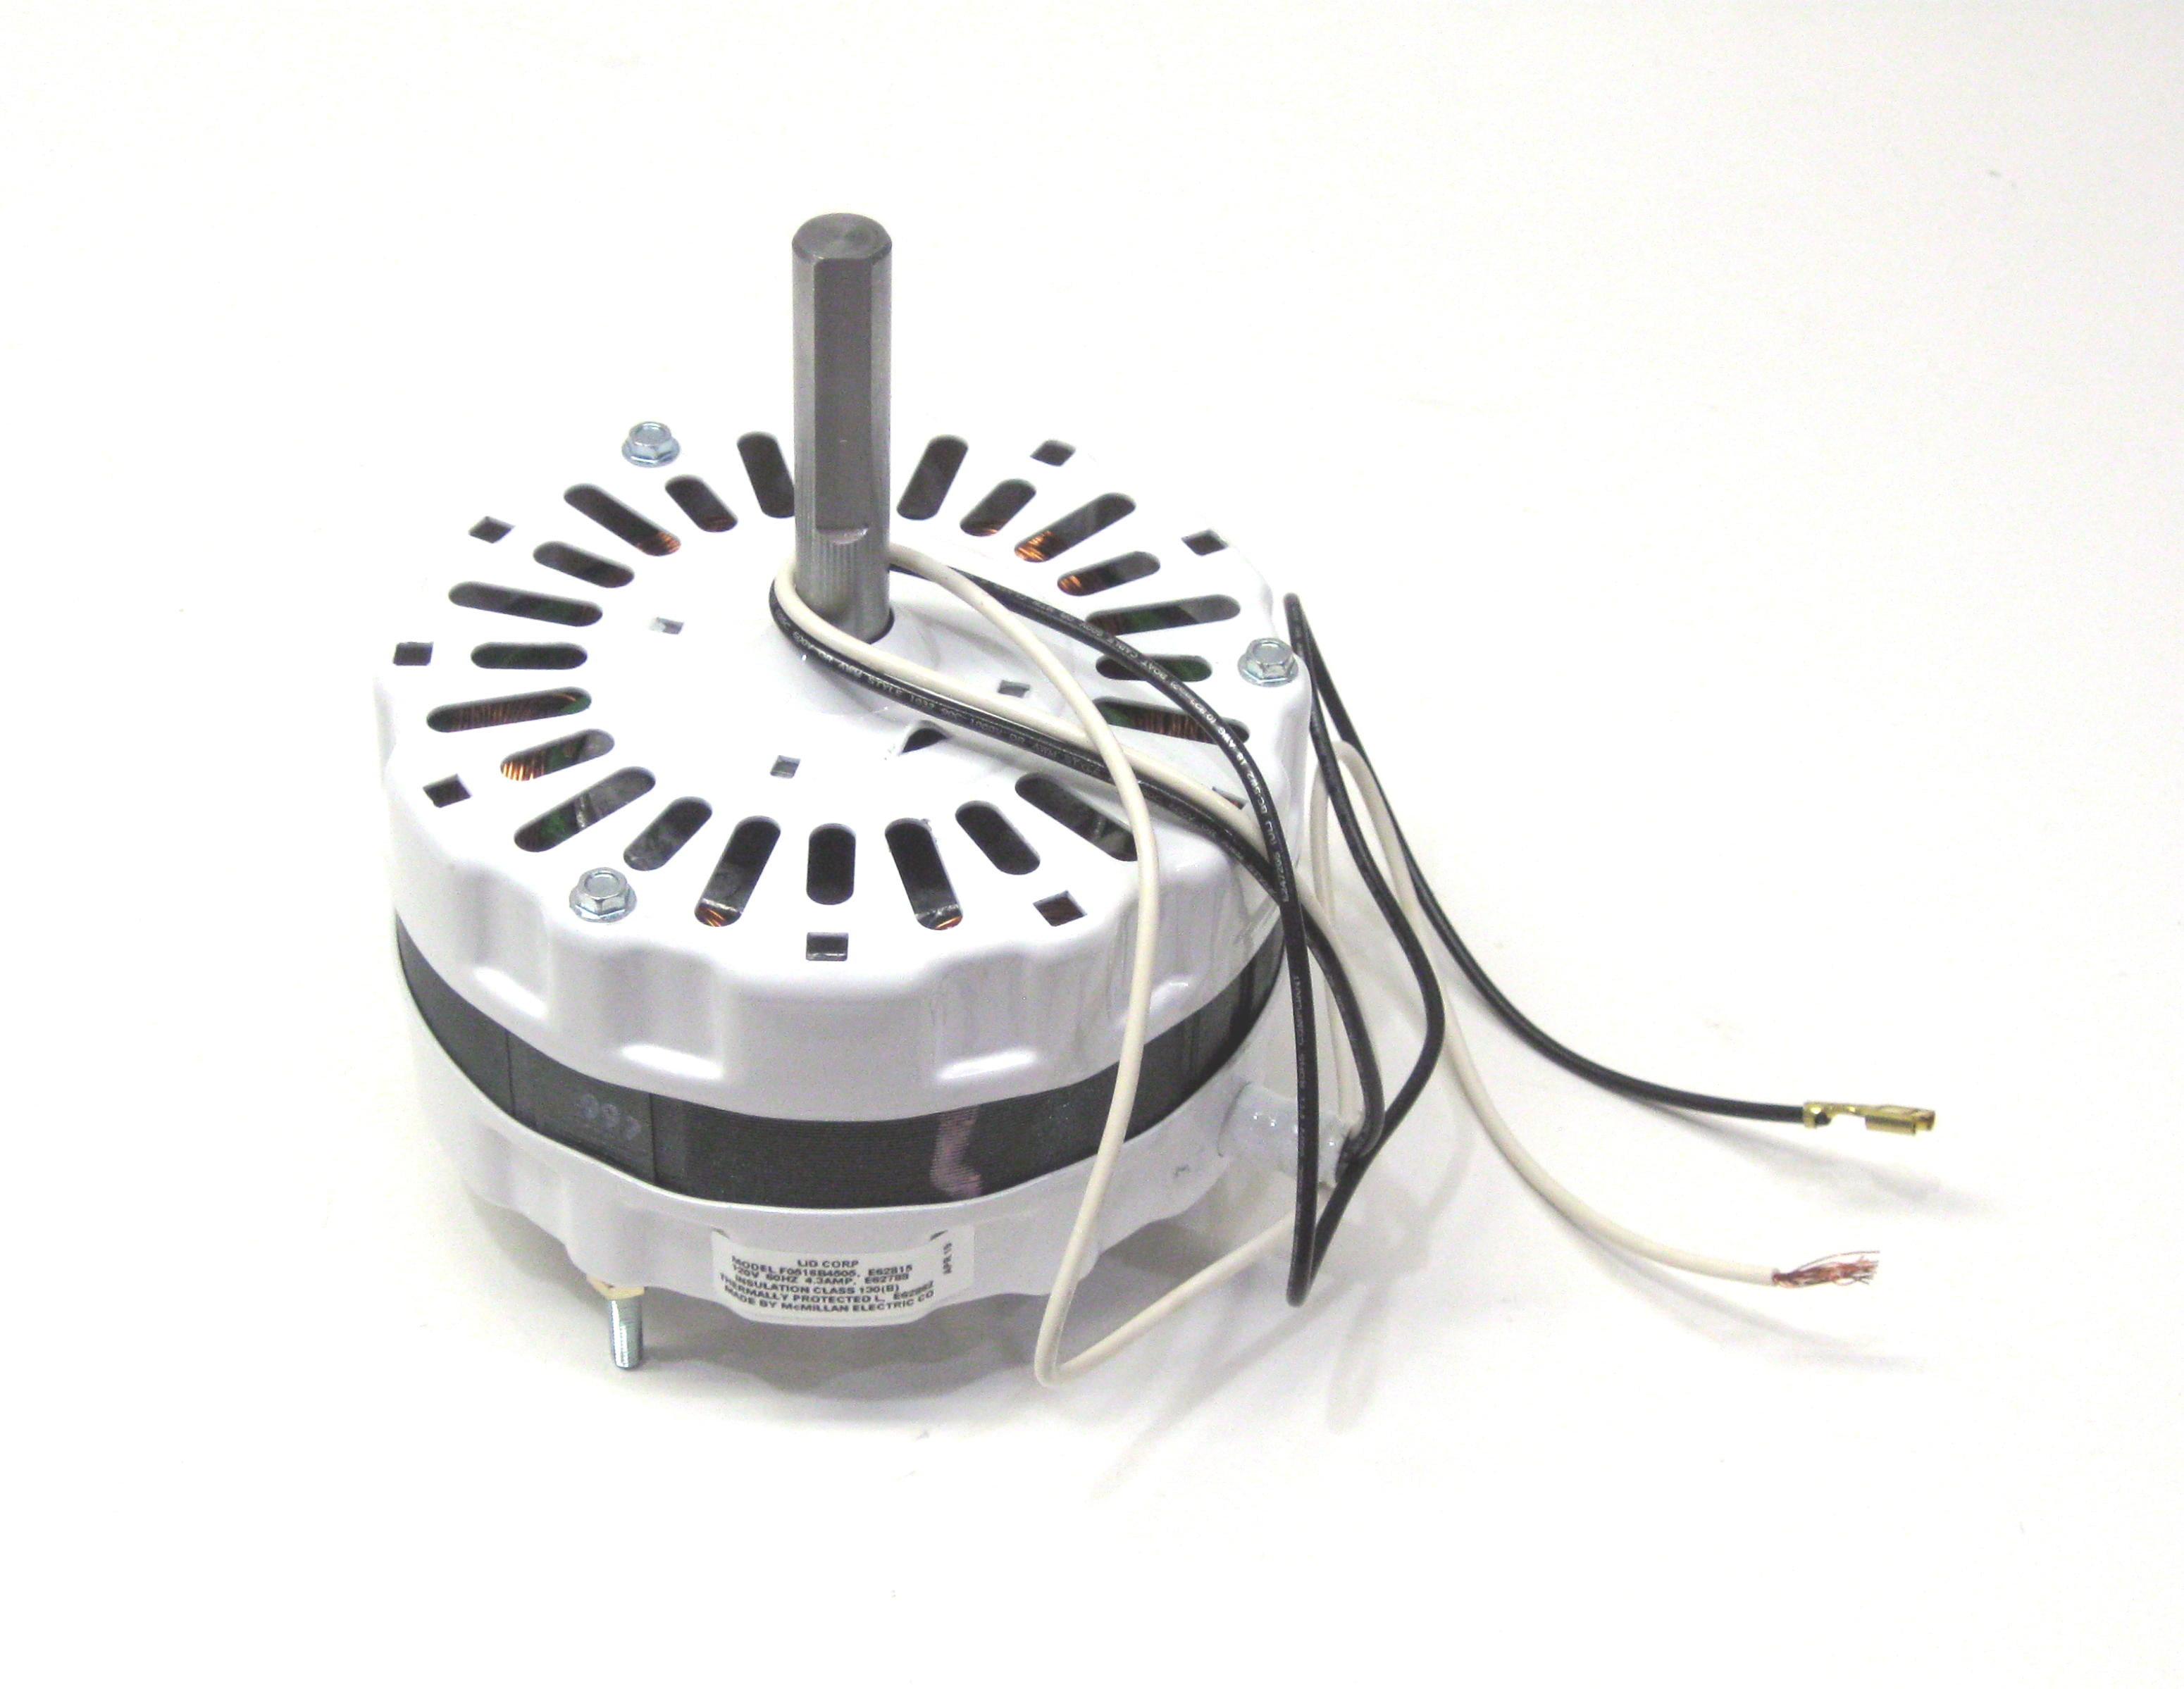 Attic Fan Motor Ventilator for Broan 97009317 99080267 5" Diameter